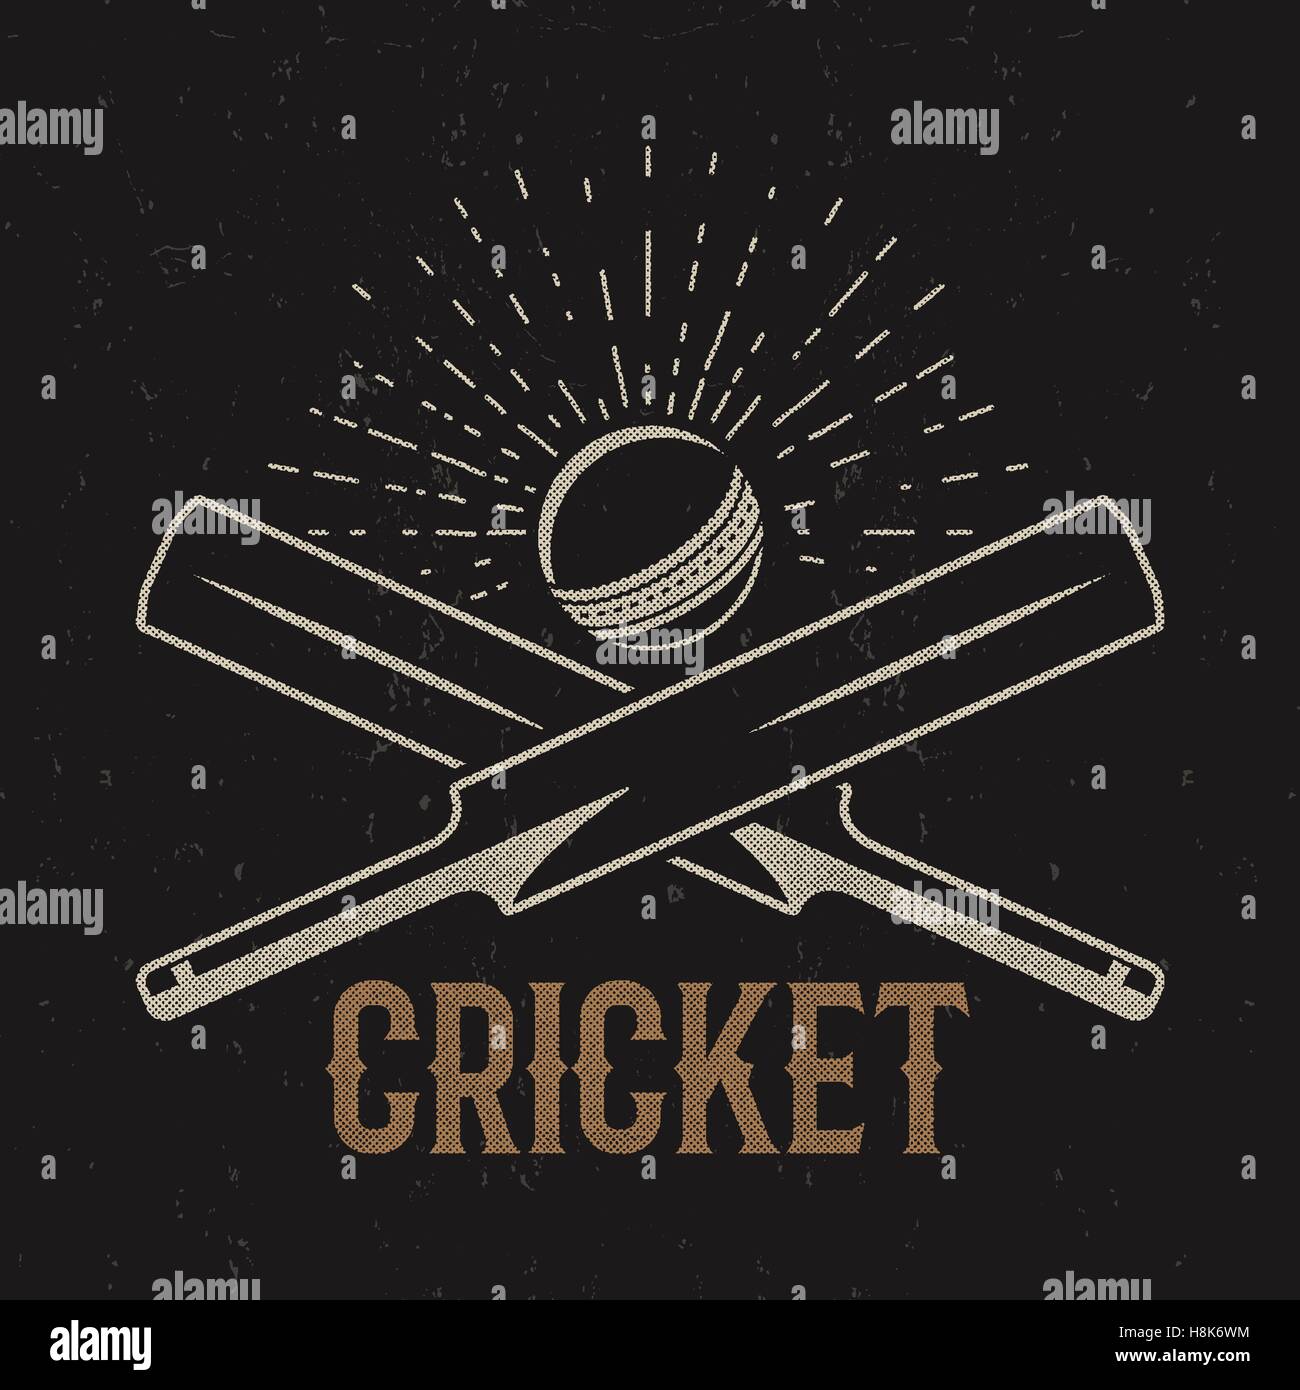 Retro cricket club emblem design. Cricket logo icon design. Cricket badge. Sports logo symbols with cricket gear, equipment. Cricket tee design. Tee shirt emblem. T-Shirt prints retro style Stock Vector